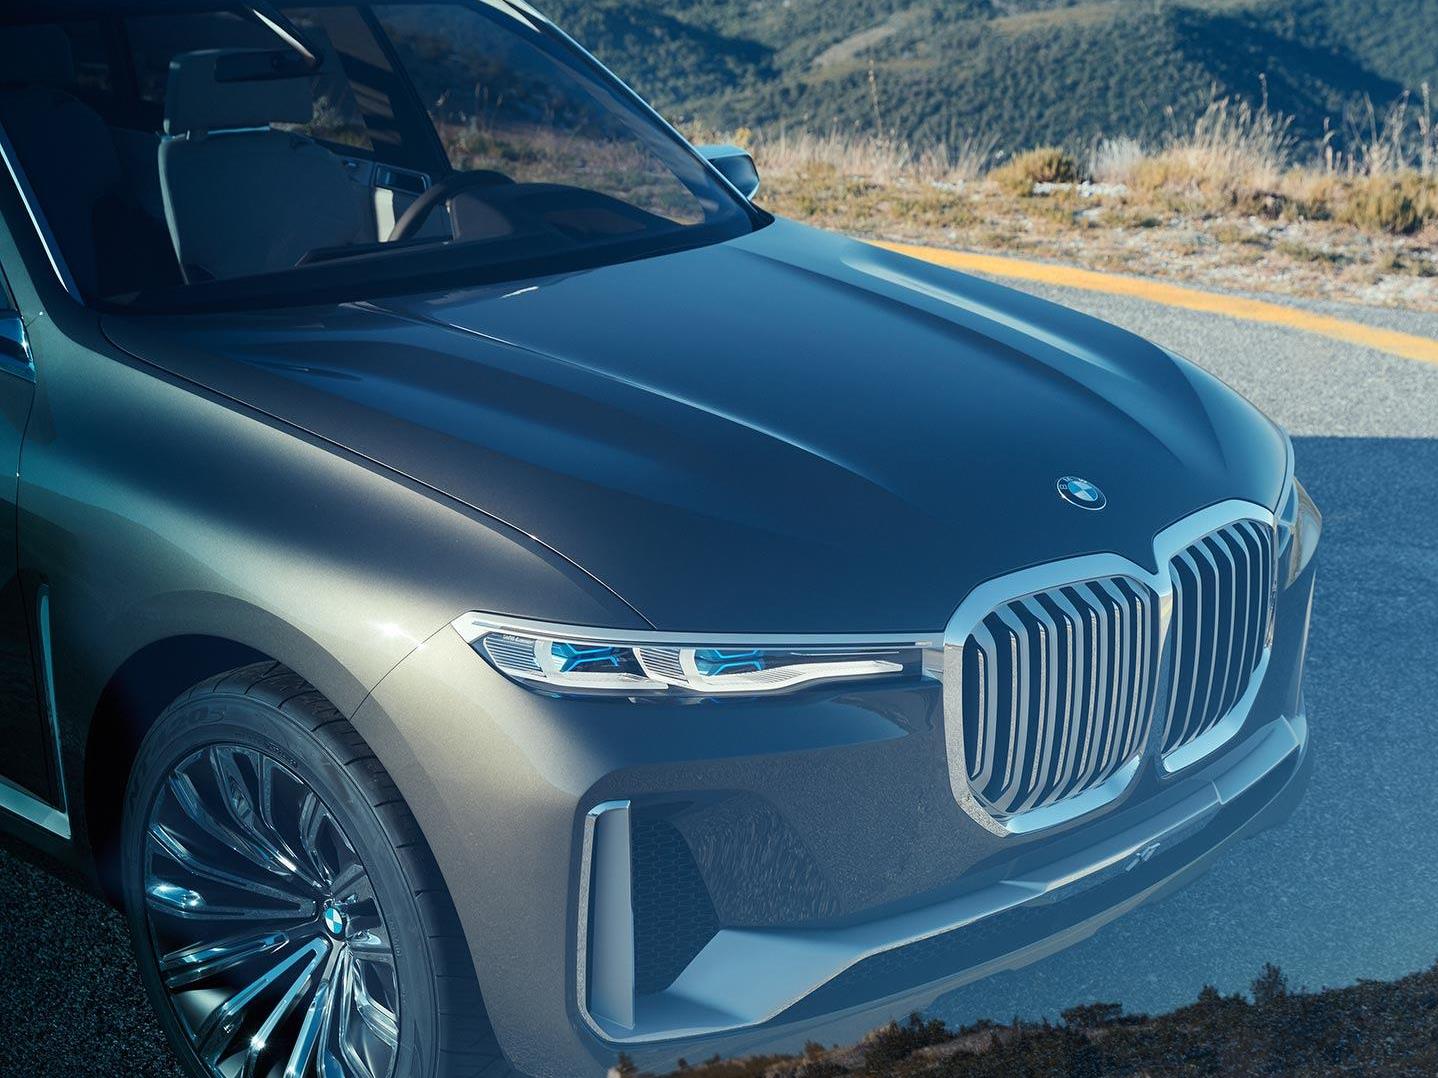 1-BMW X8 اوایل سال 2020 وارد بازار خواهد شد